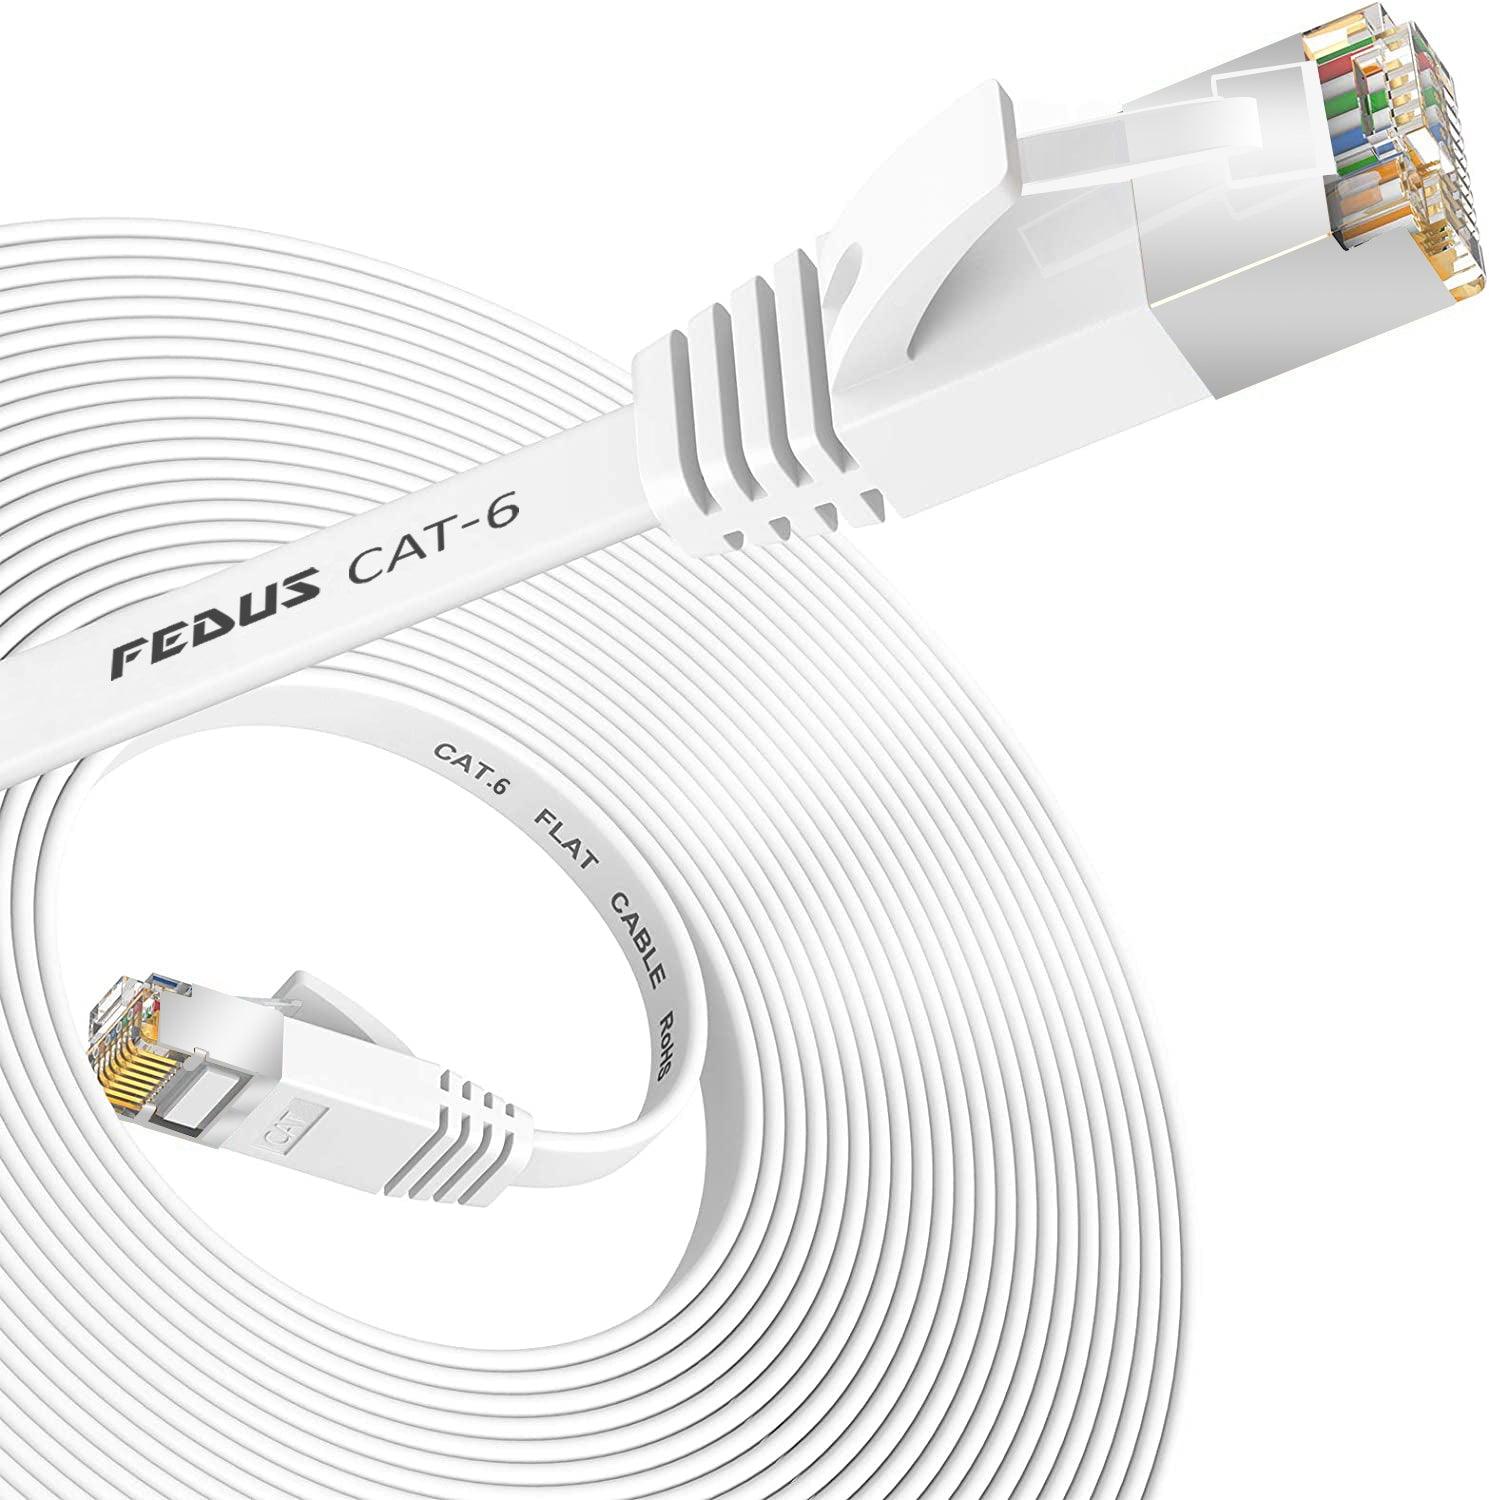 RCA Cable – FEDUS